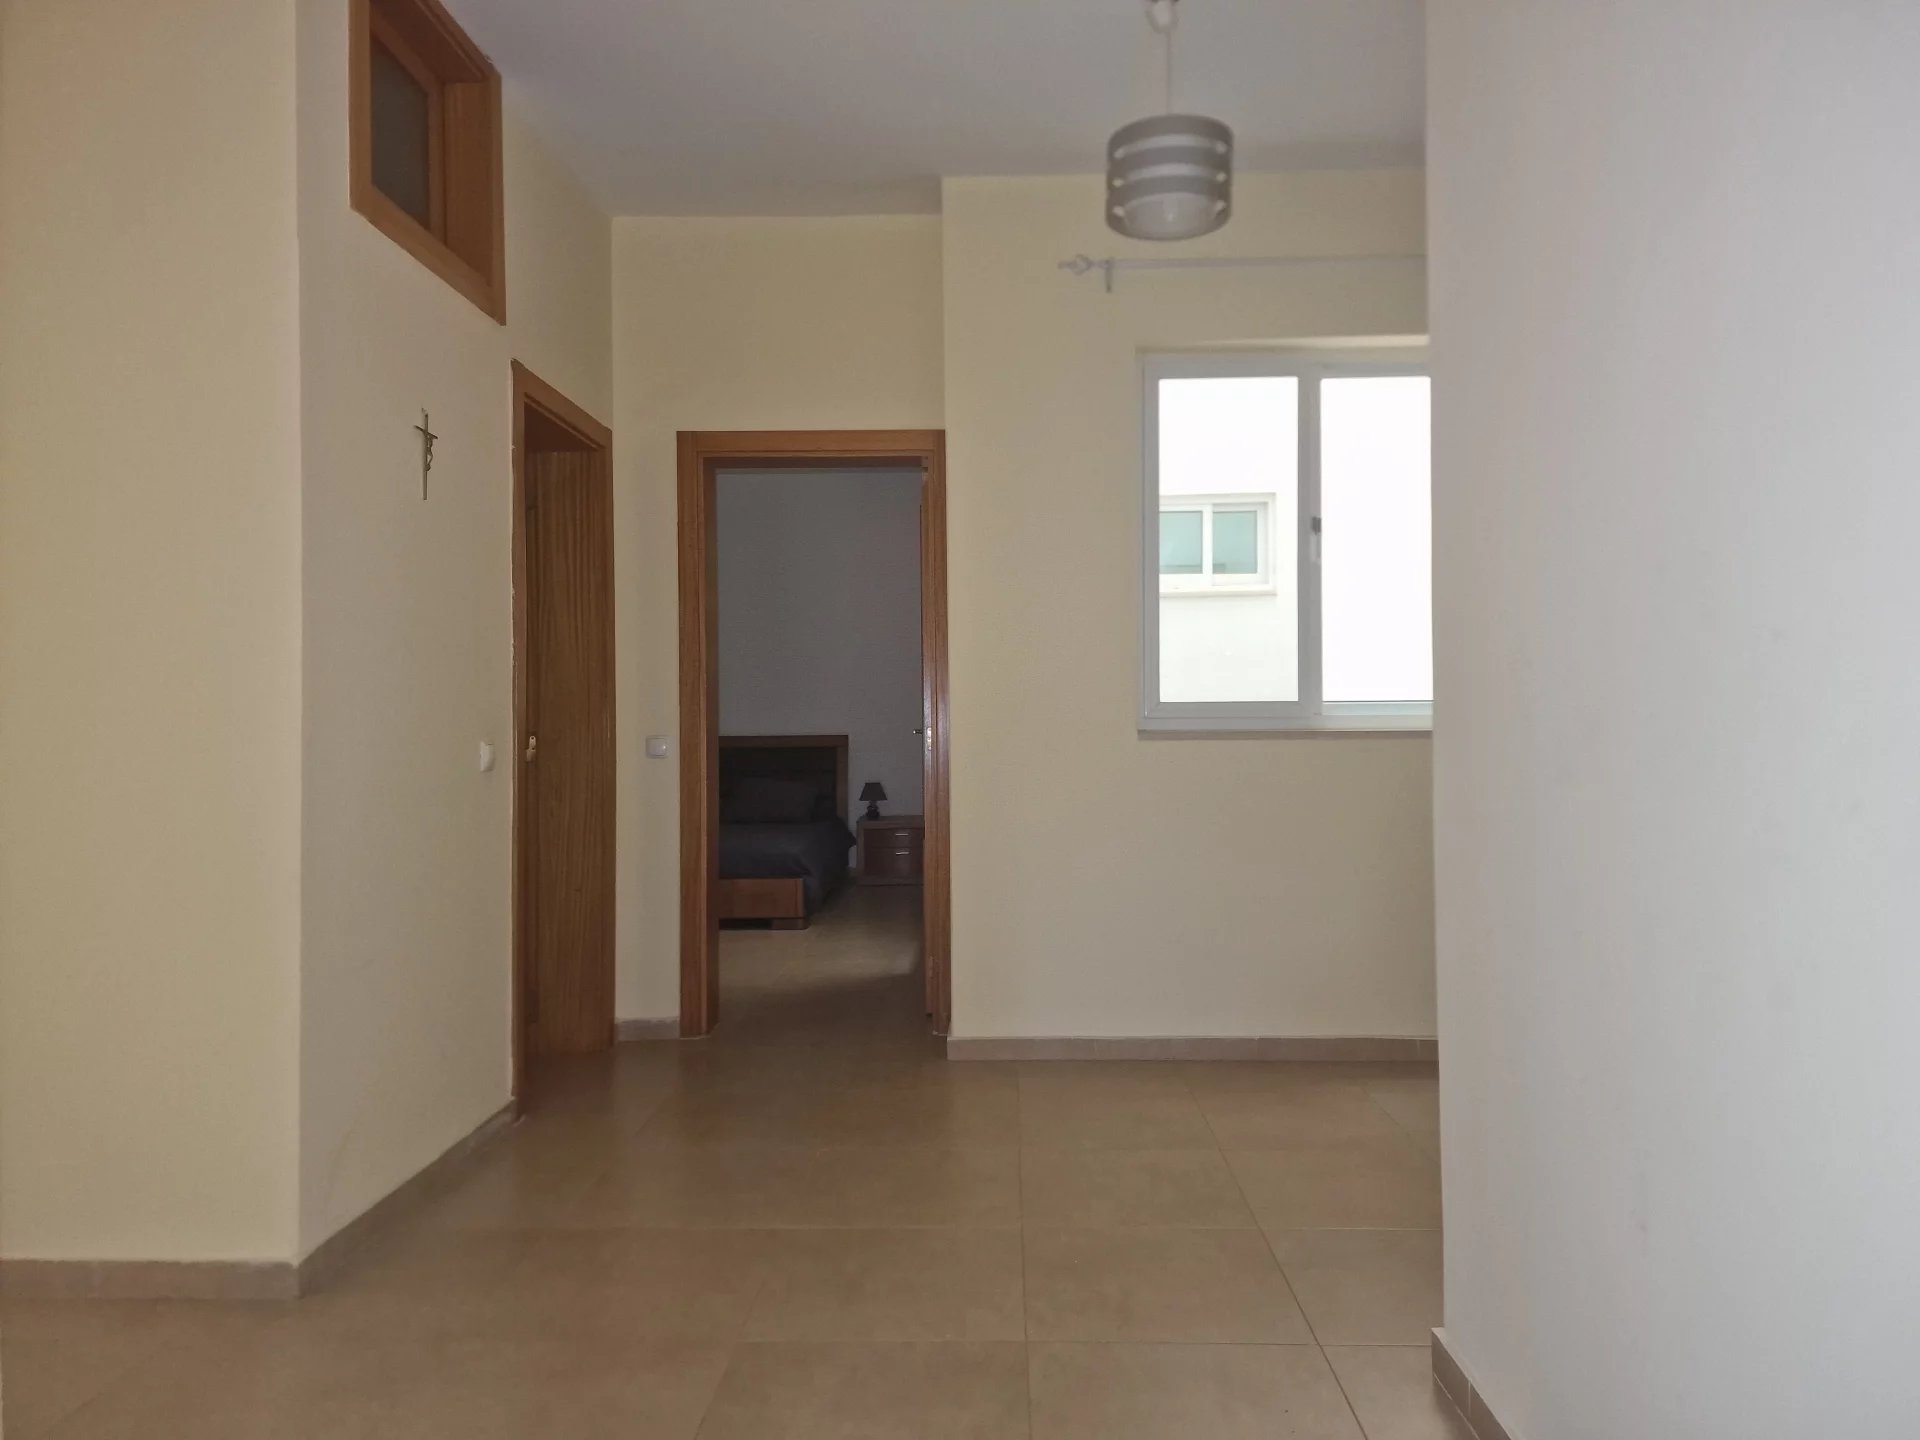 Apartment for rental in Praia